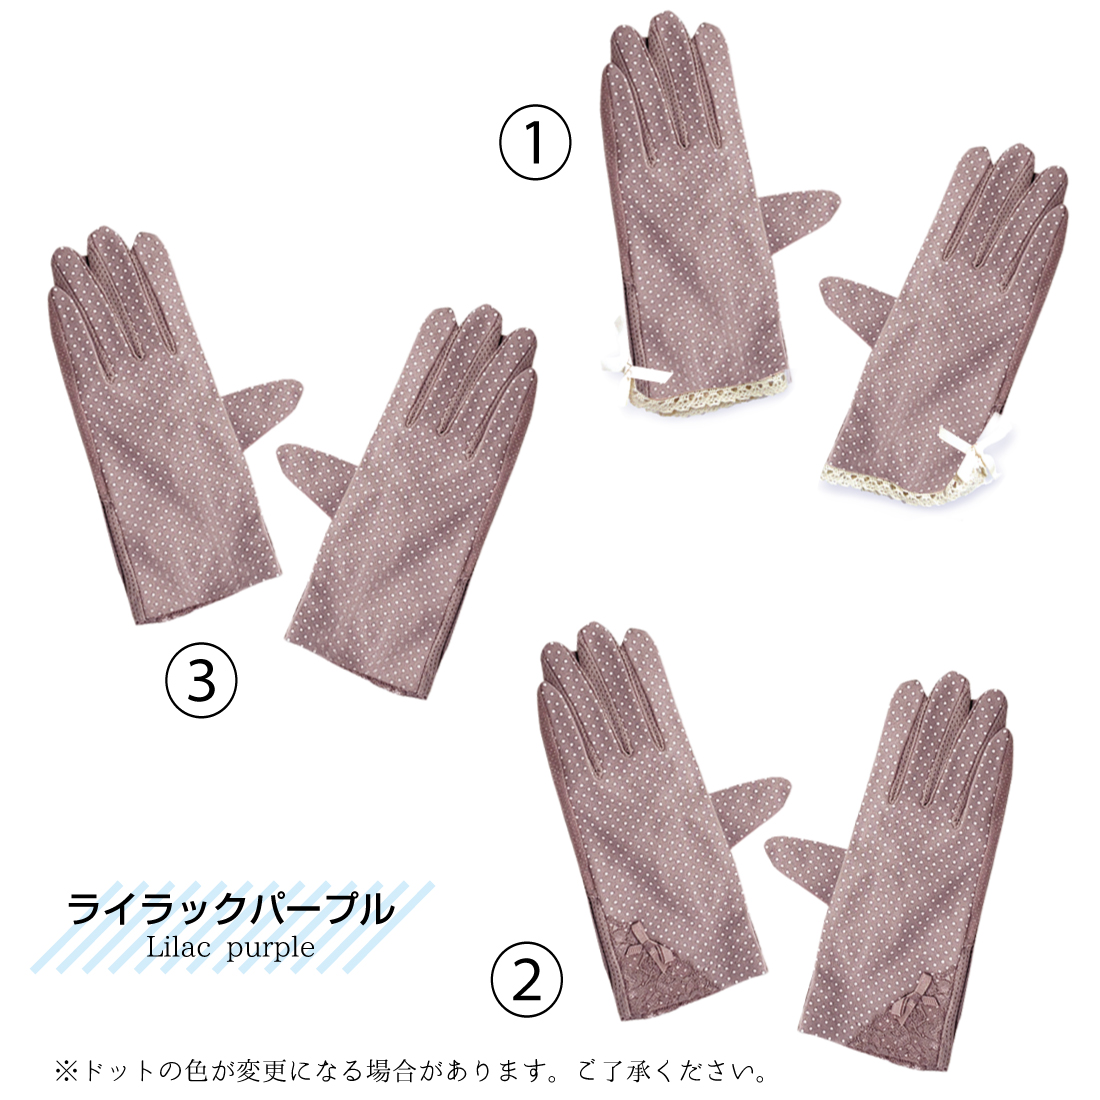 UVカット 手袋 ショート ハンドケア アームカバー 日焼け止め レディース おしゃれ 紫外線対策